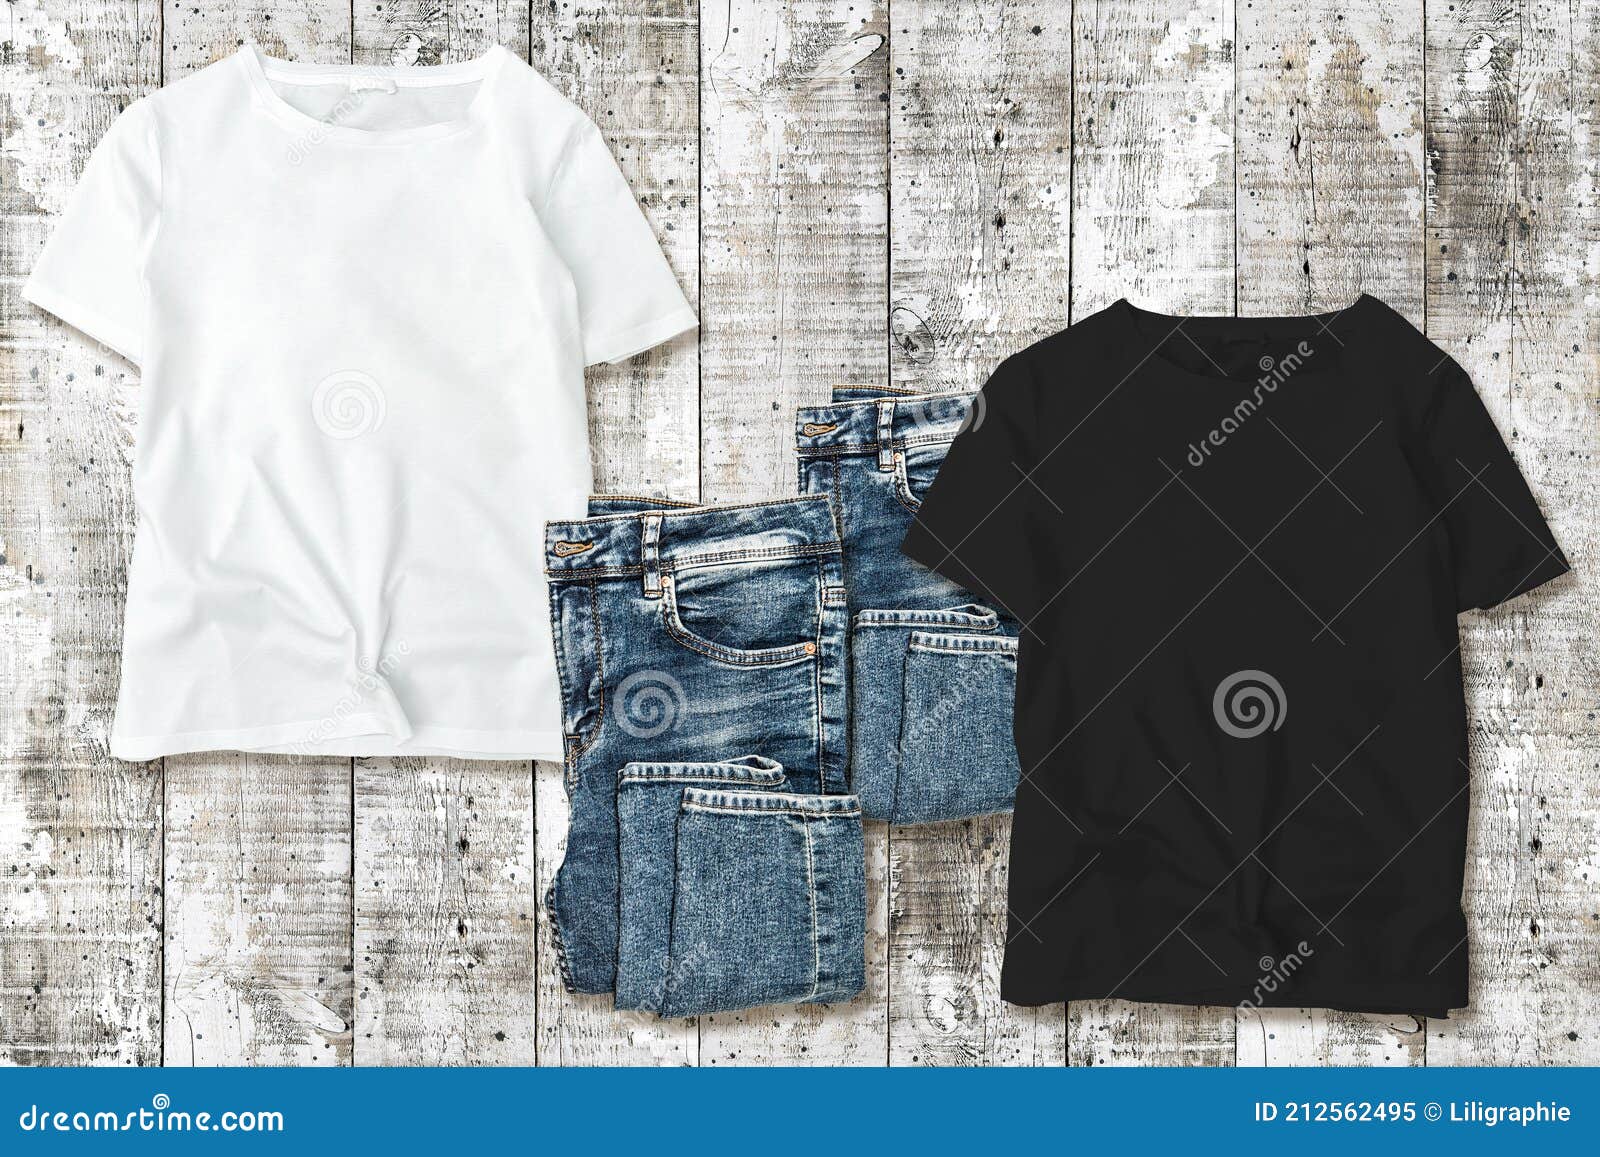 tshirt mockup fashion flatlay website online shop social media